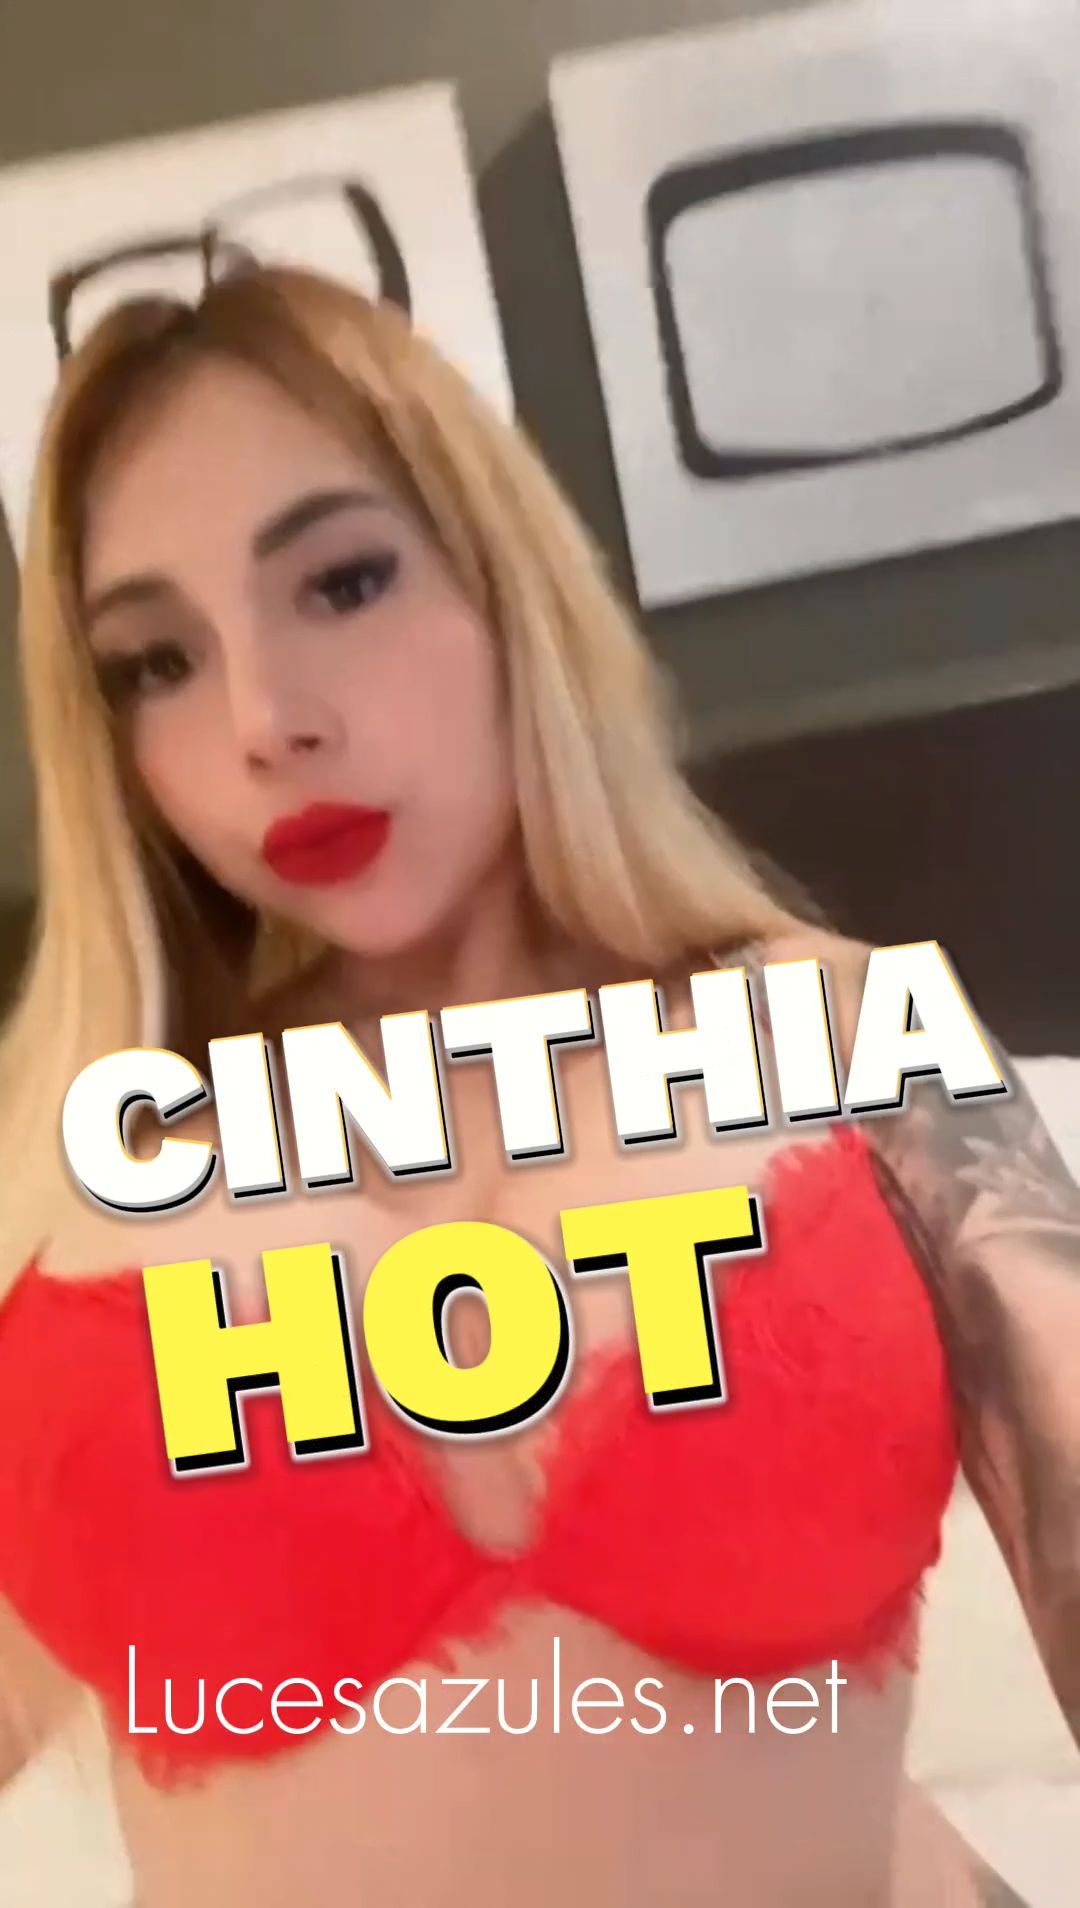 Cinthia - Hot